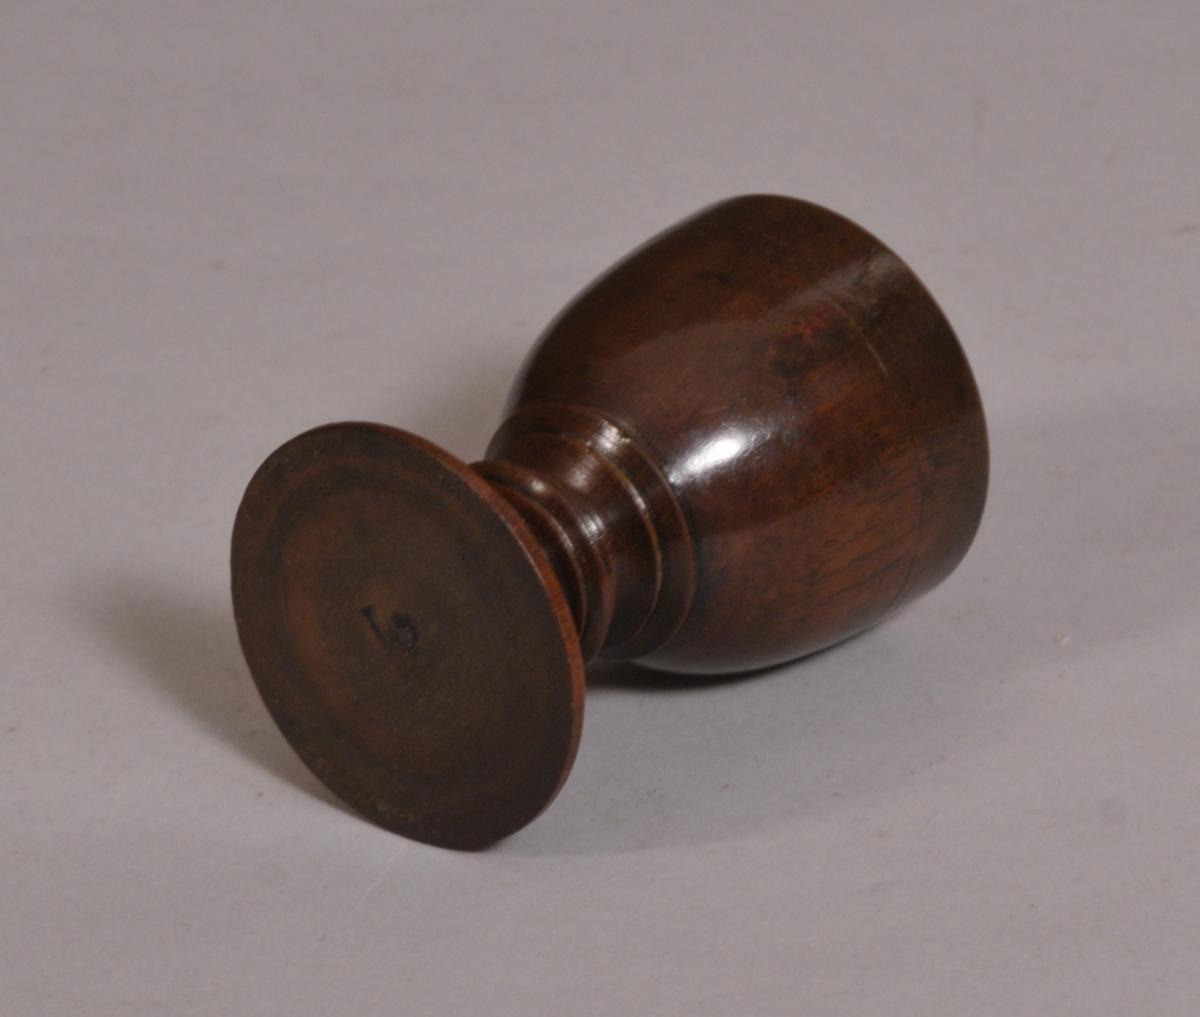 S/3739 Antique Treen 19th Century Mahogany Egg Cup